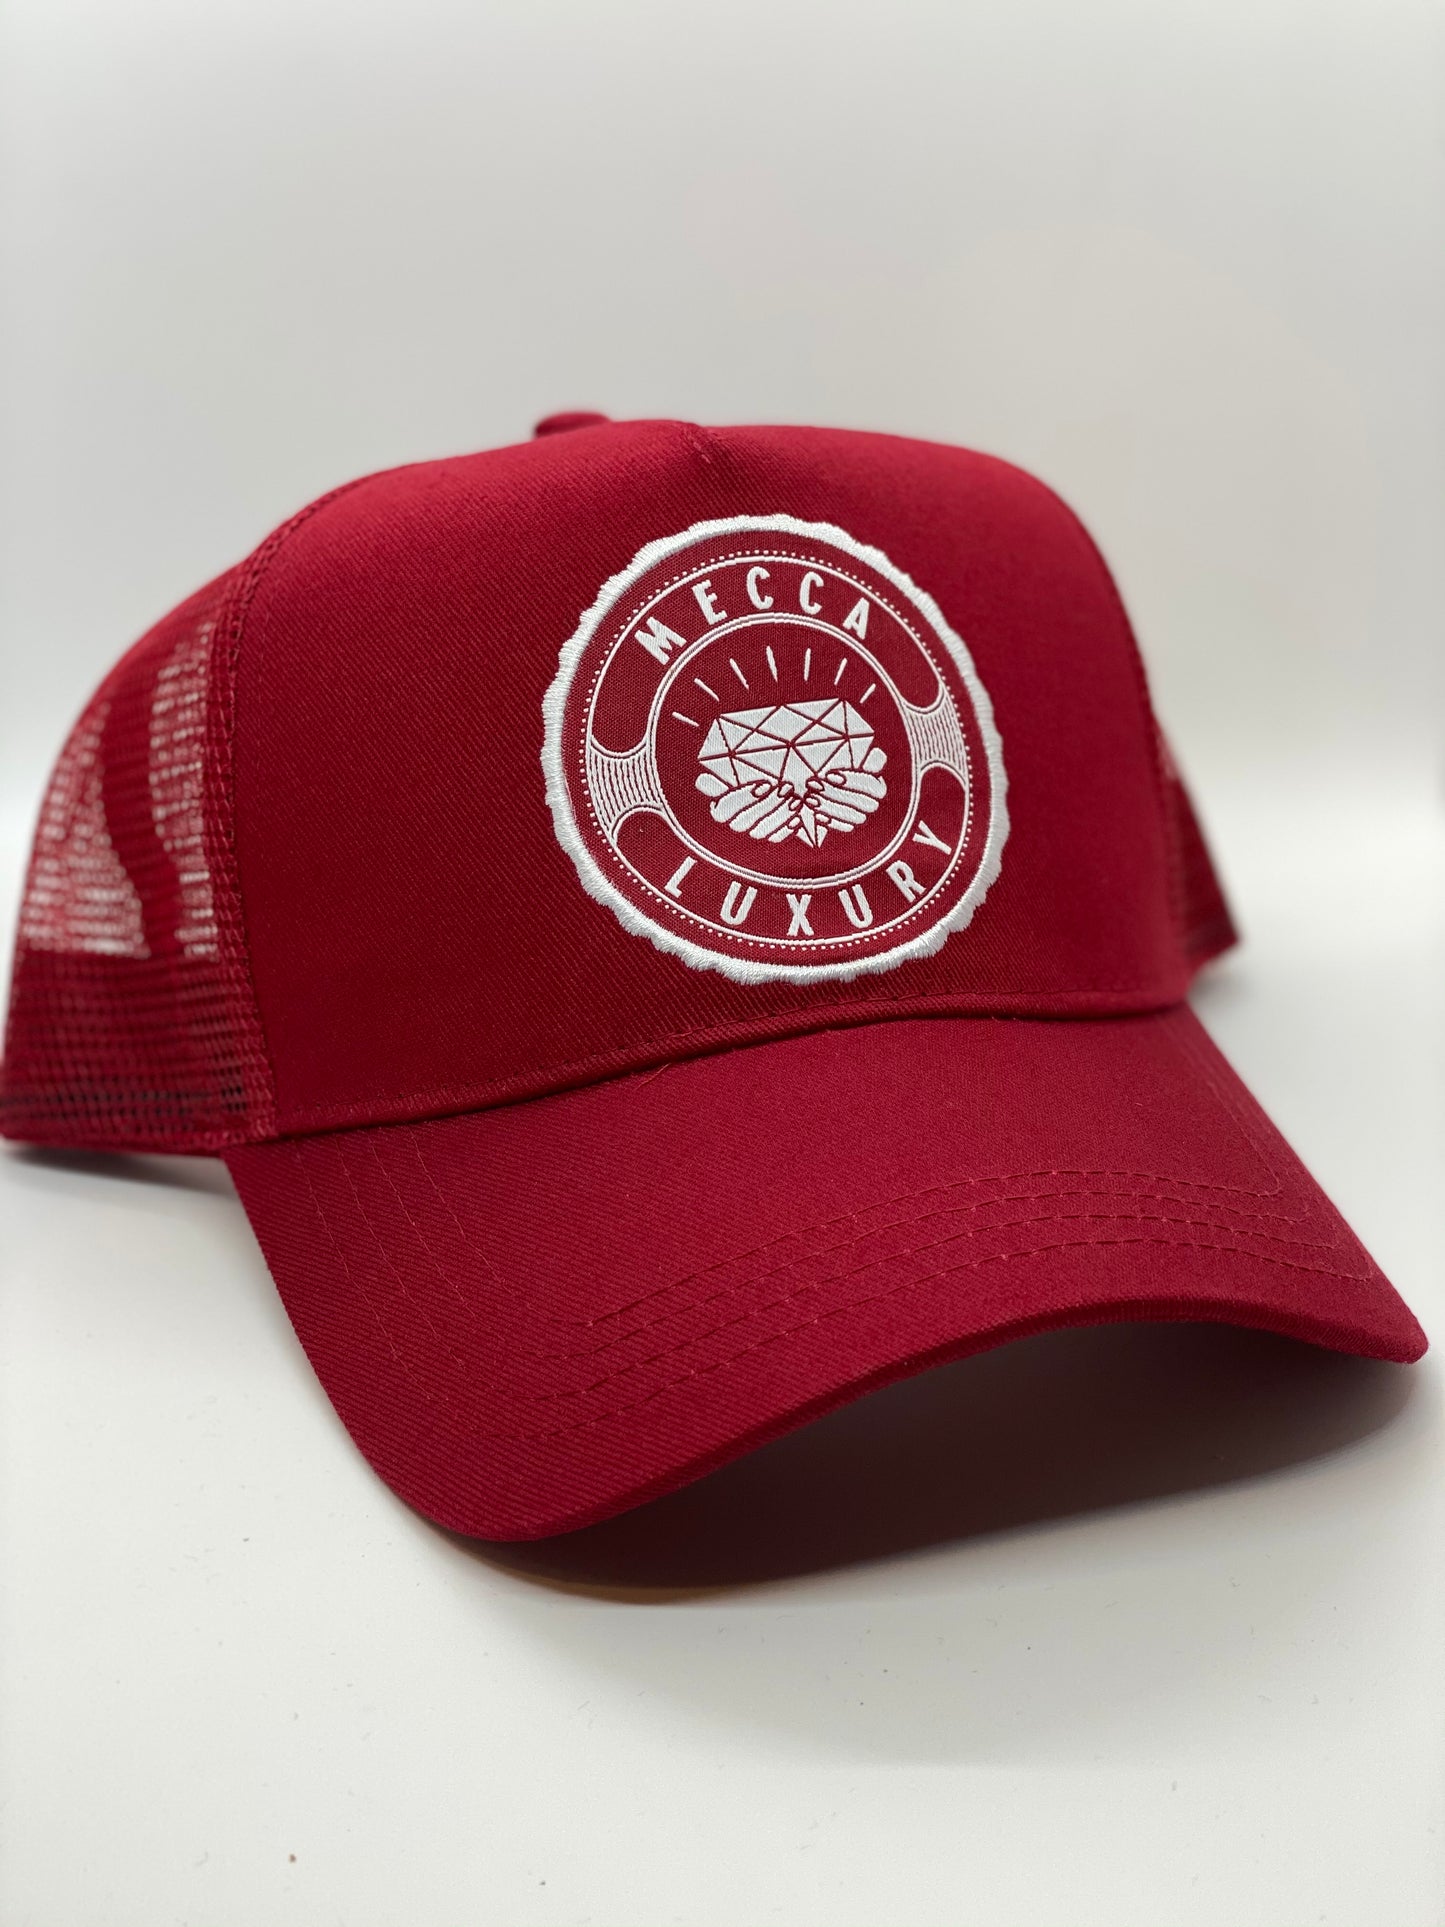 Classic Meccalux Trucker Hat